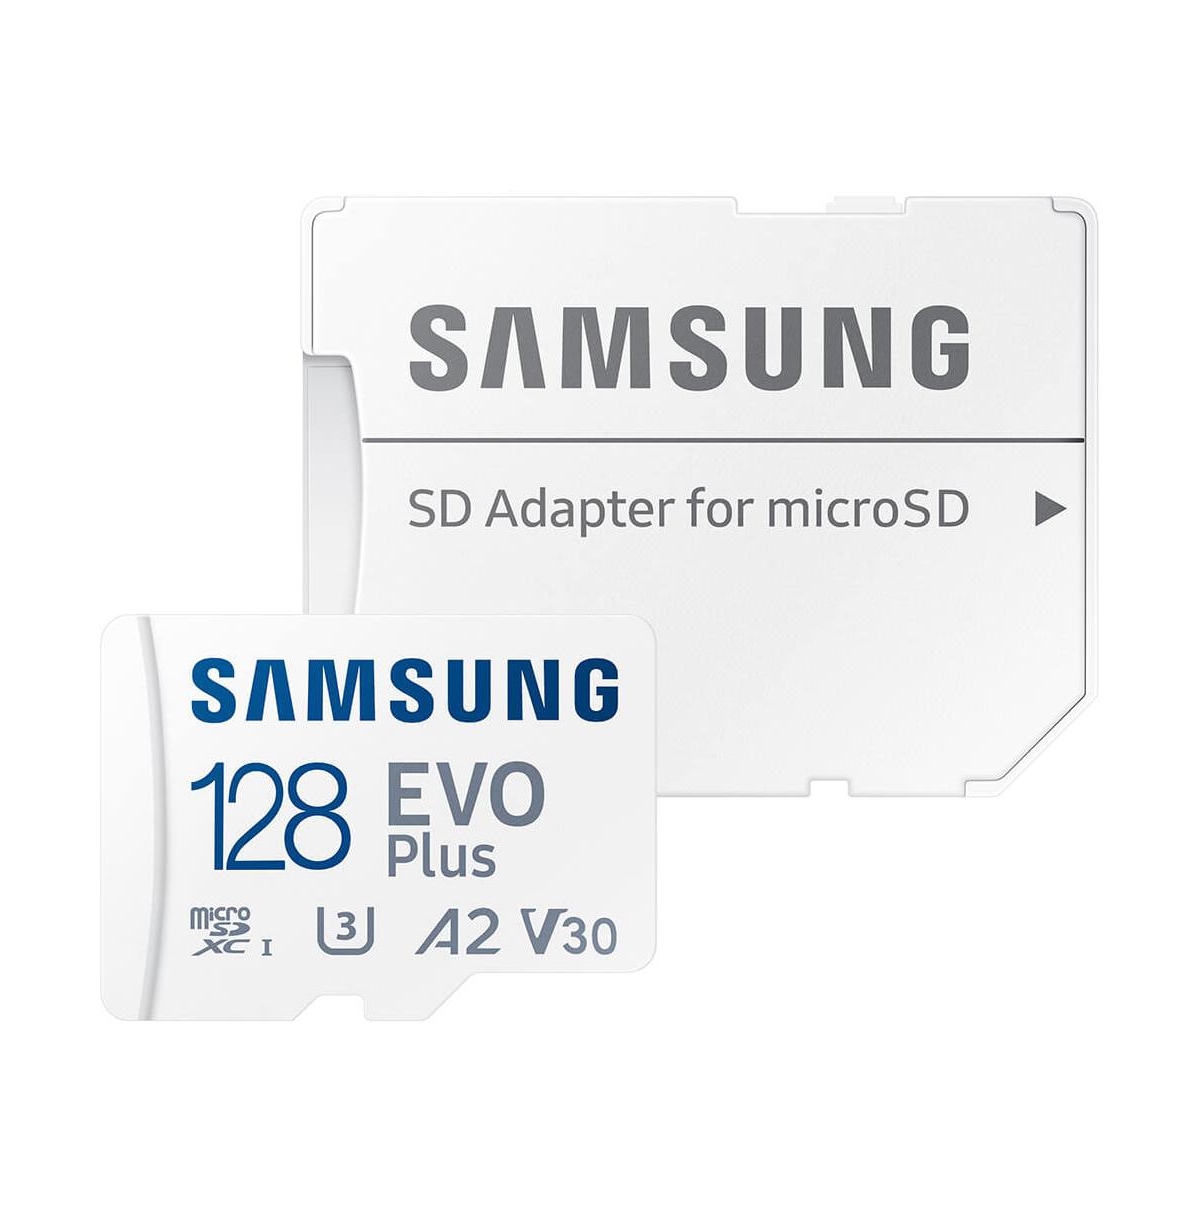 UPC 887276545745 product image for Evo Plus + Adapter microSDXC - 128GB | upcitemdb.com